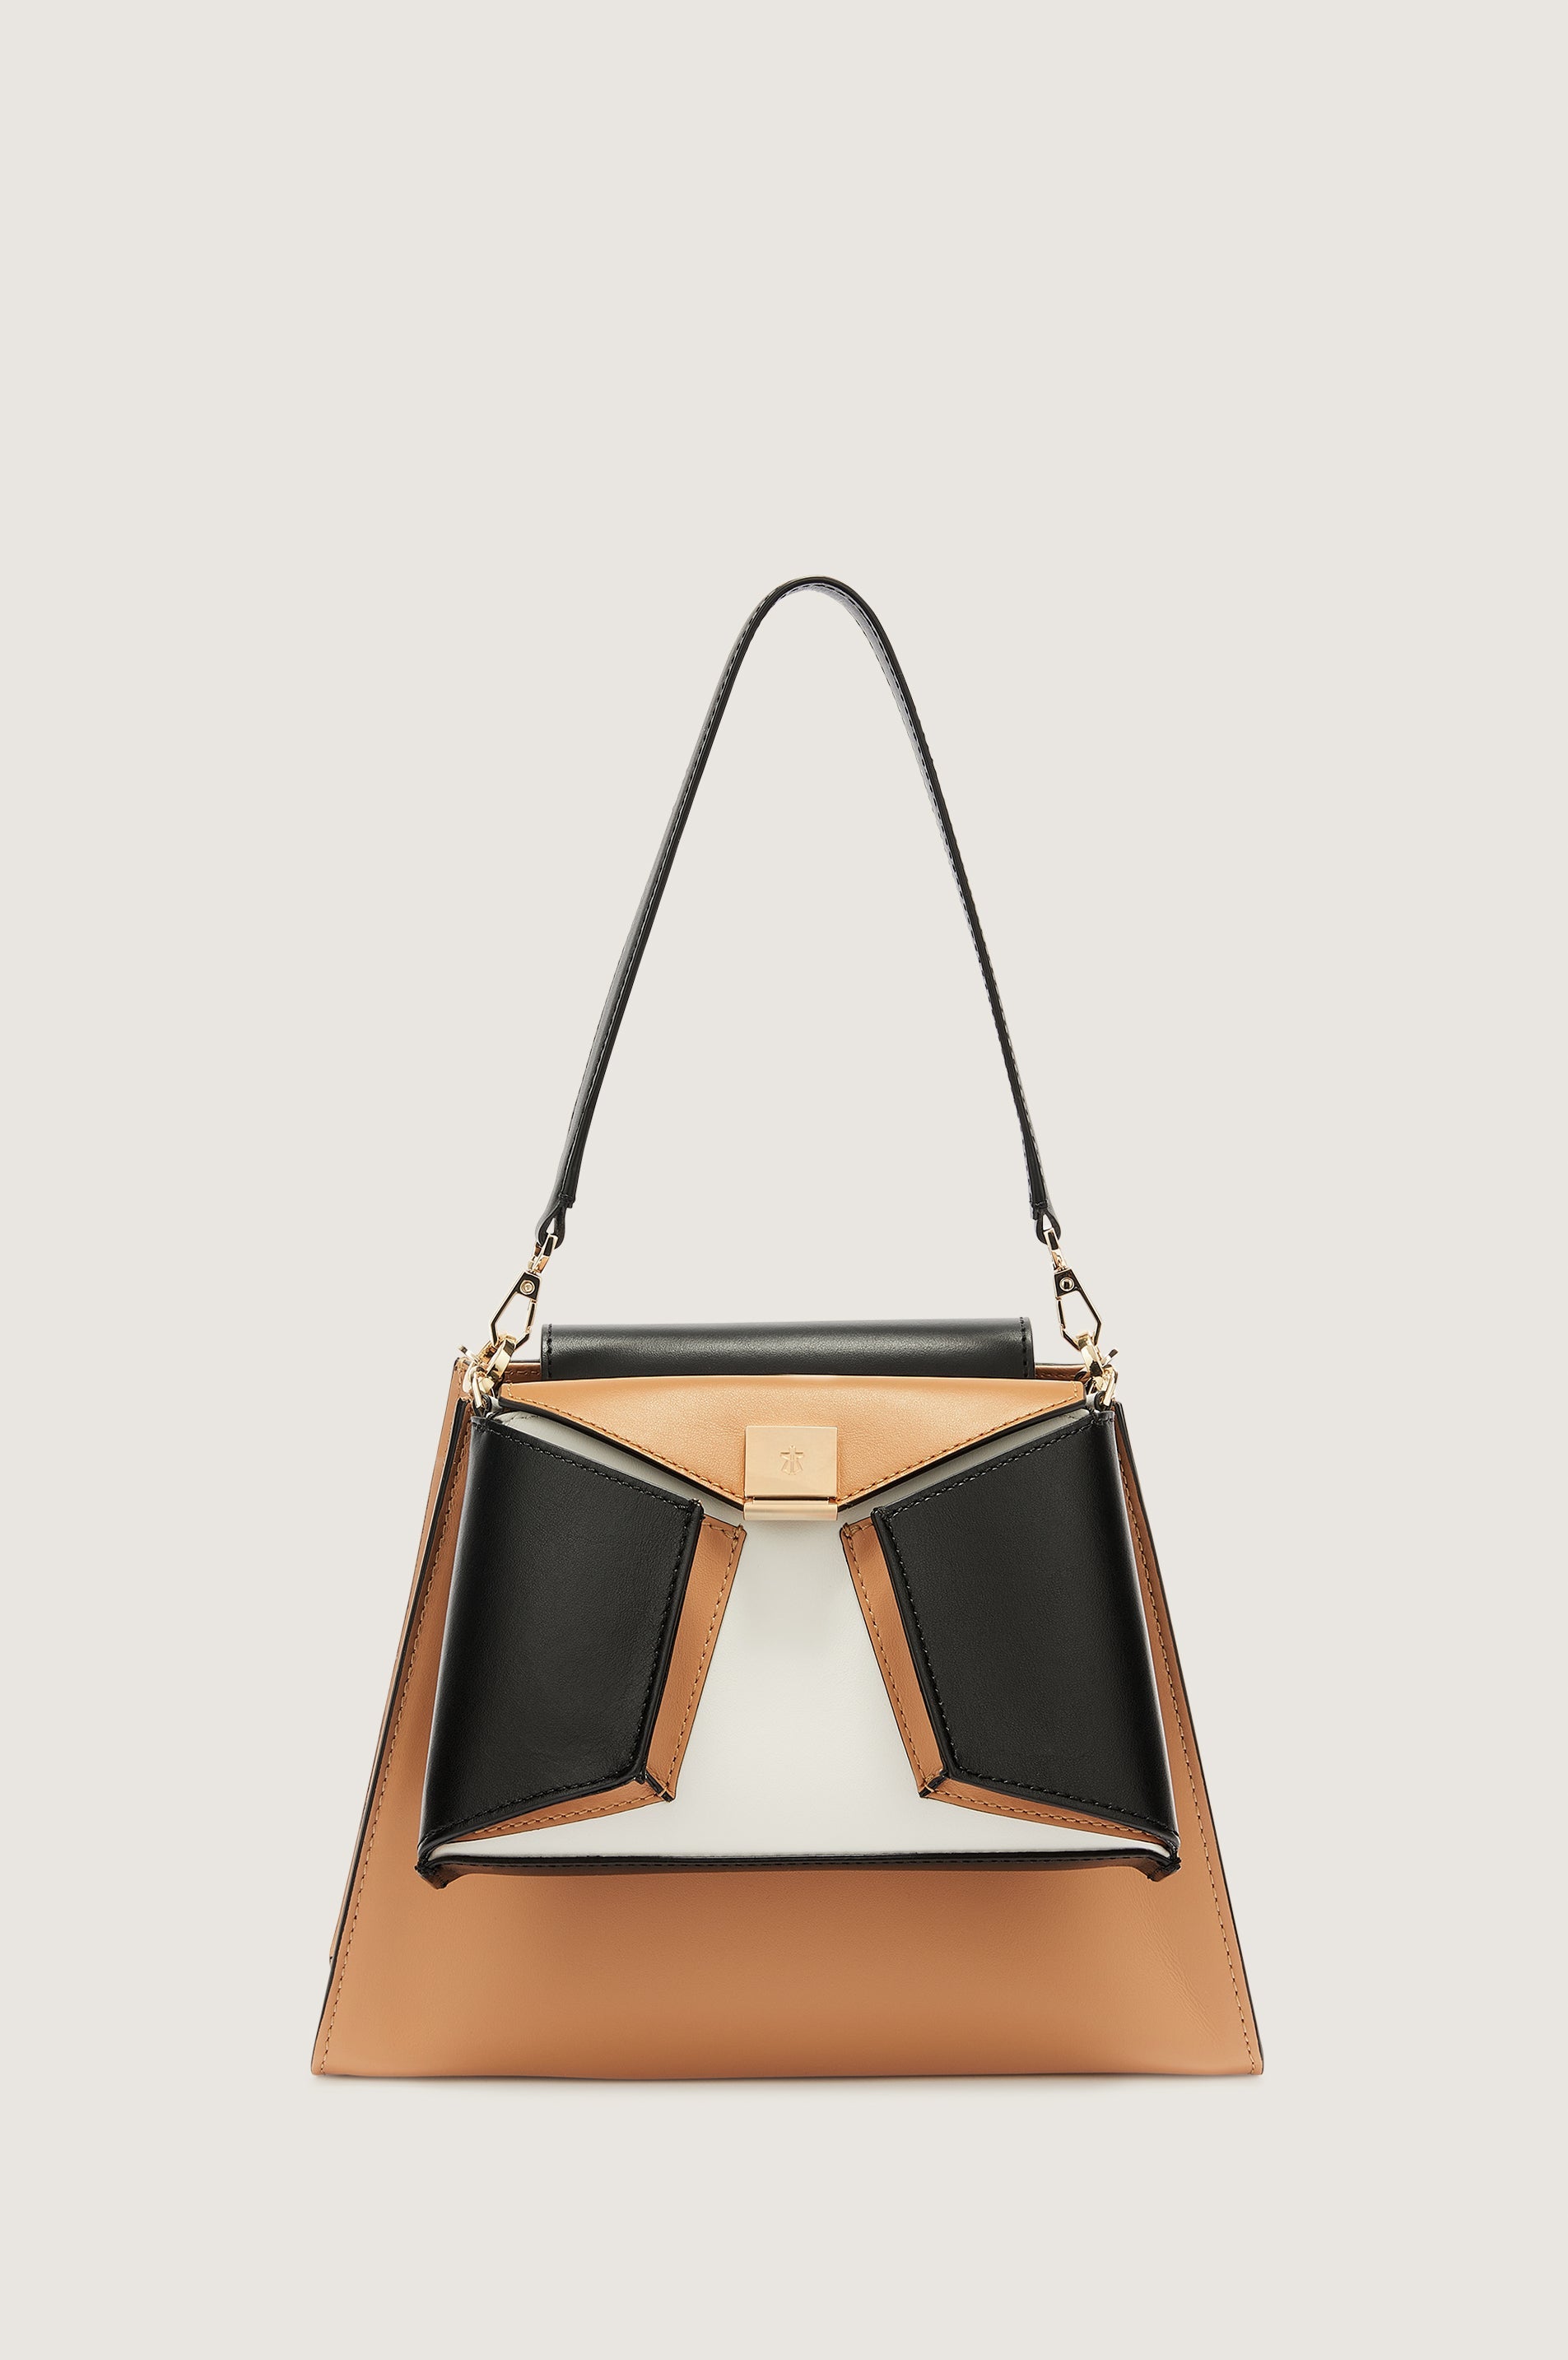 Lara Bellini LIZ TWIN Light Gold Calfskin Geometric Handbag